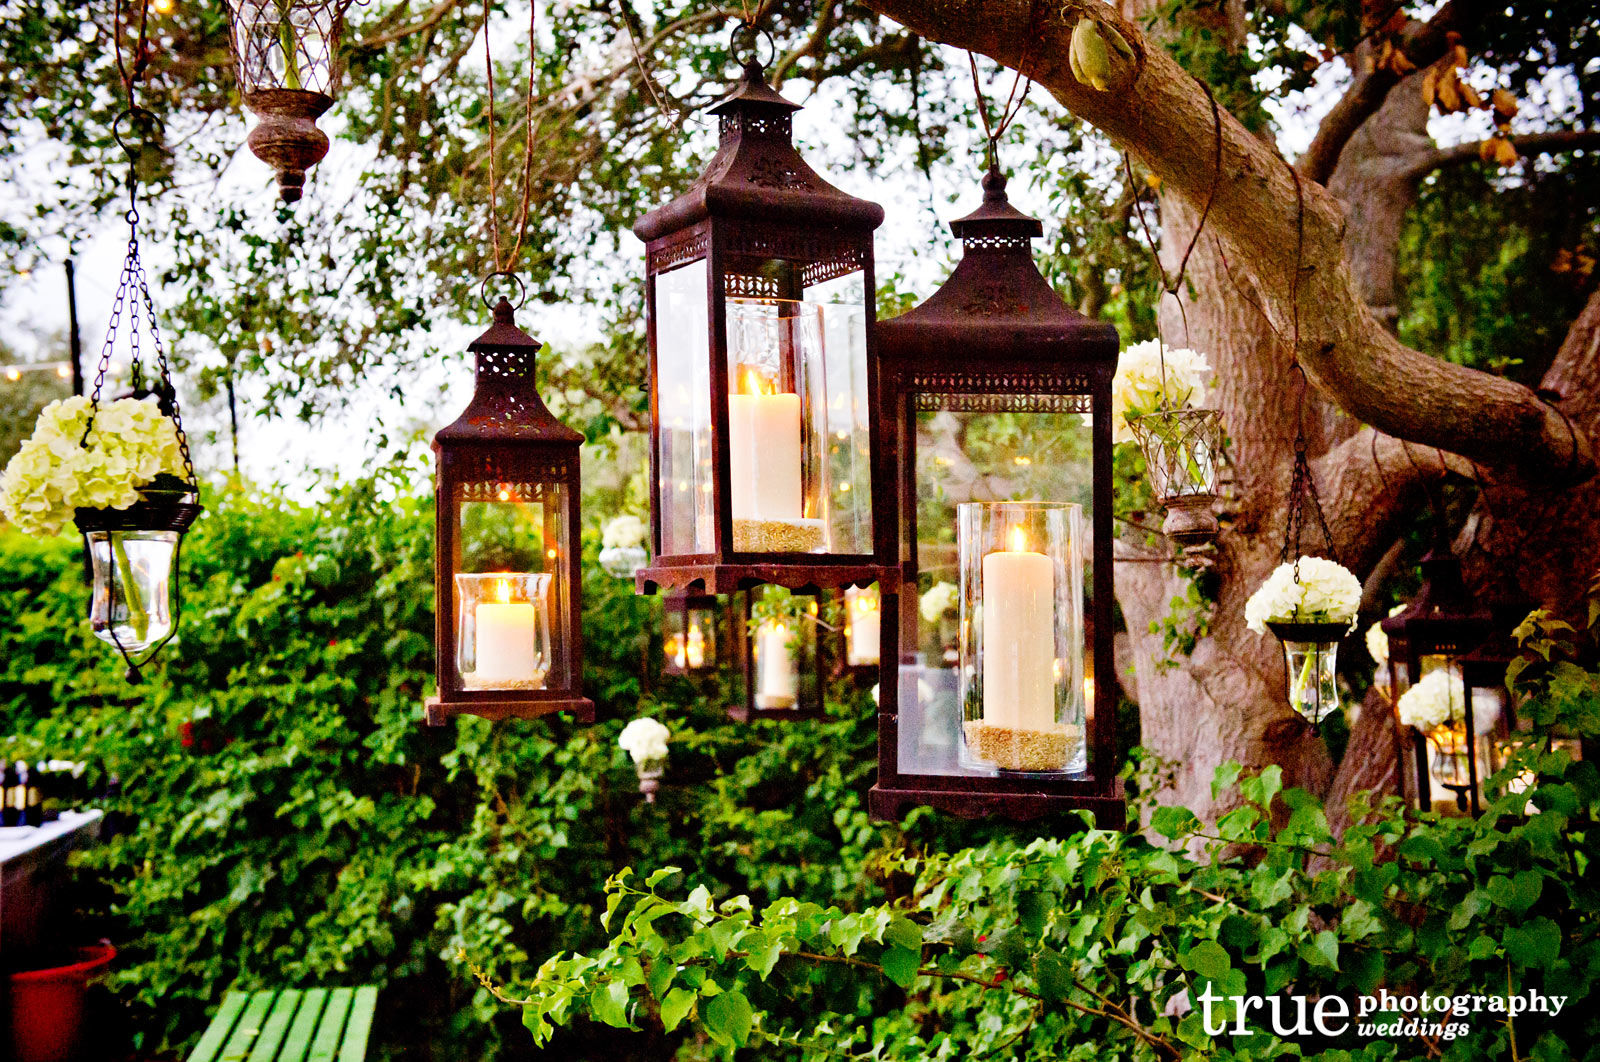 Vintage hanging lanterns with candles